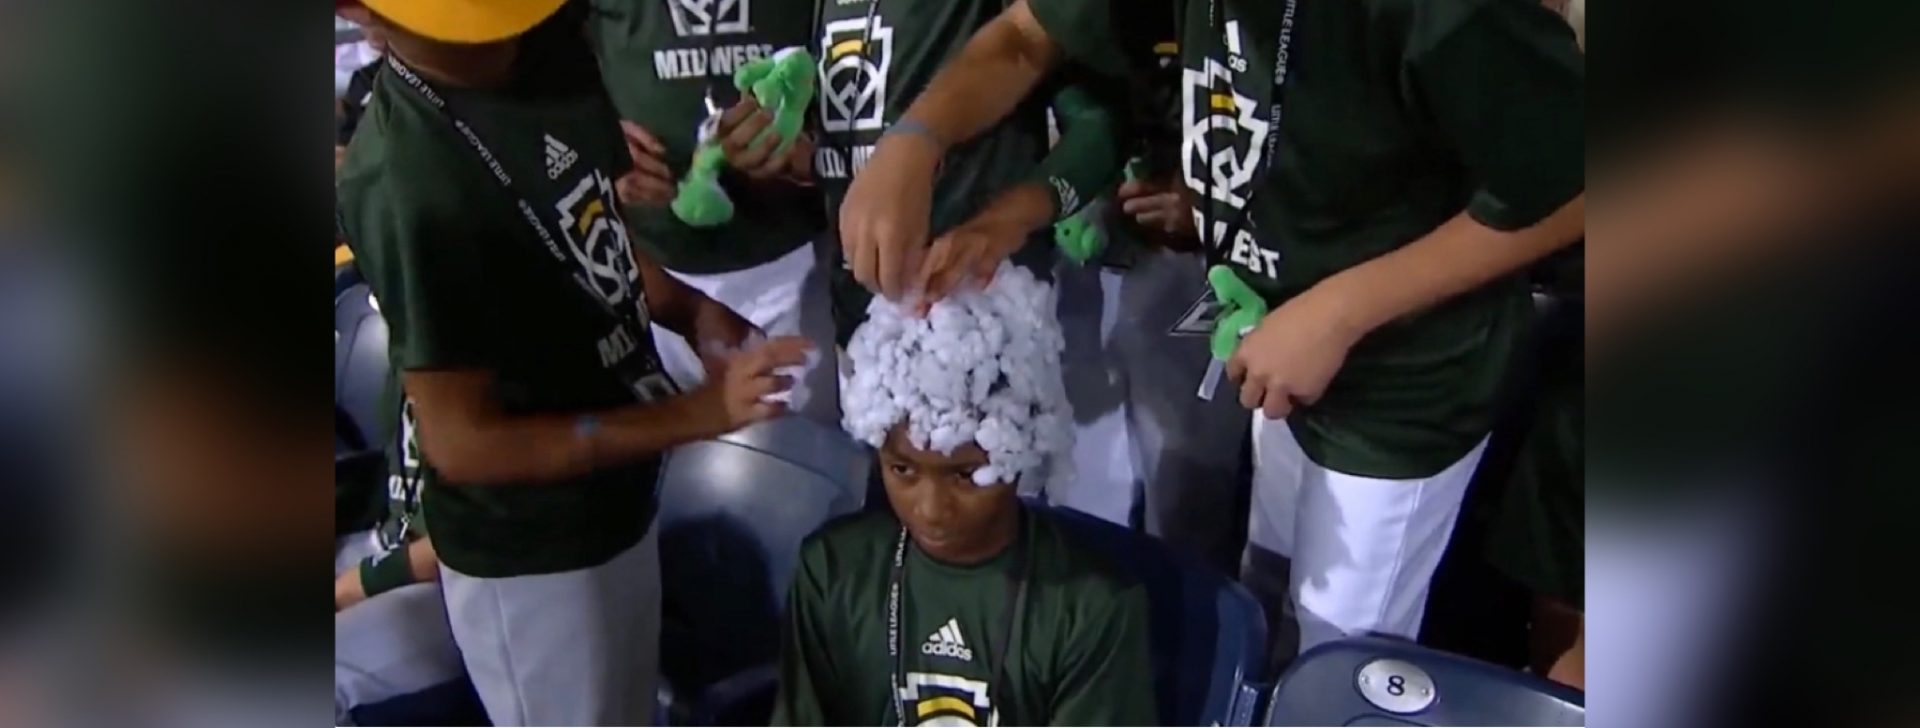 ESPN Recording Shows Teammates Putting Cotton Balls In Boy's Hair